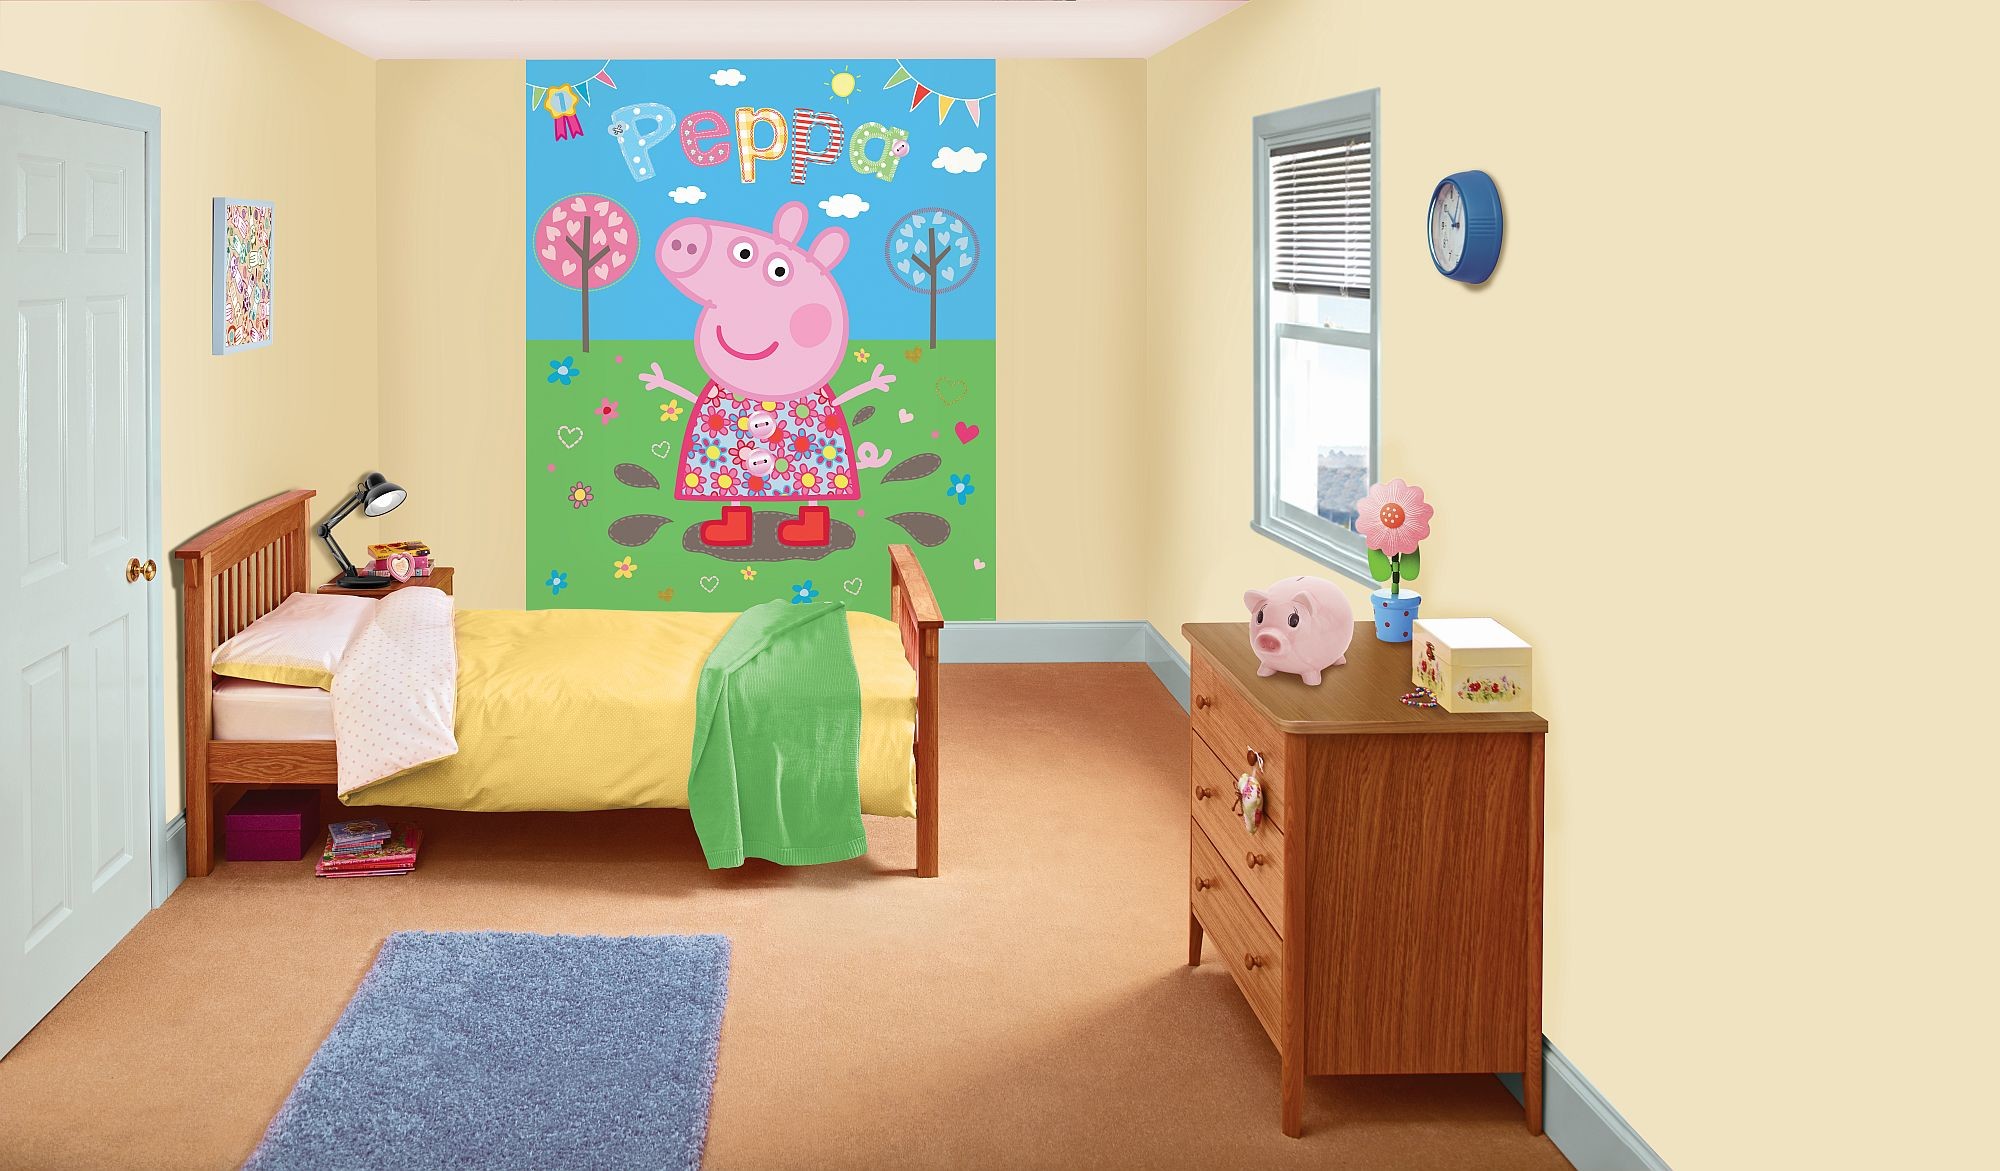 2000x1171 Walltastic Peppa Pig bedroom in a box Wallpaper main image ...